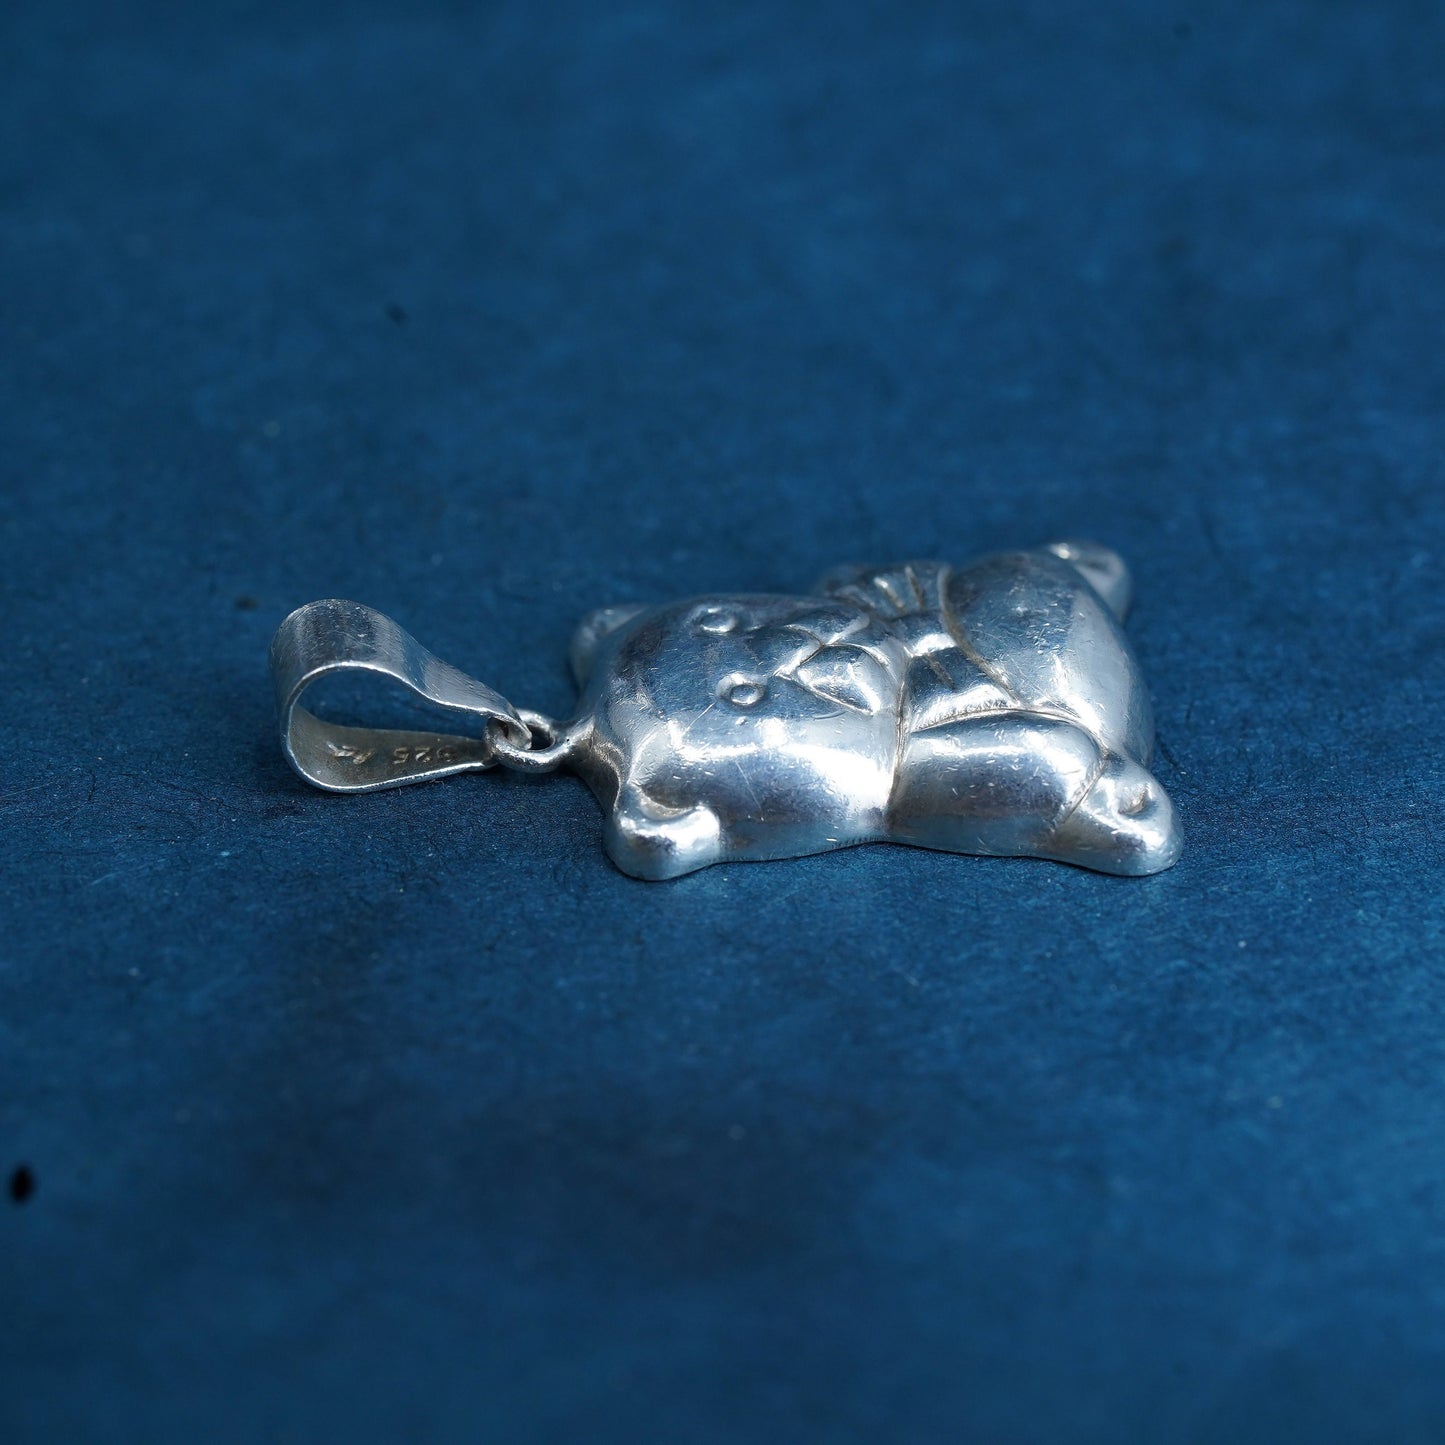 Vintage Sterling silver handmade brooch, 925 teddy bear pendant